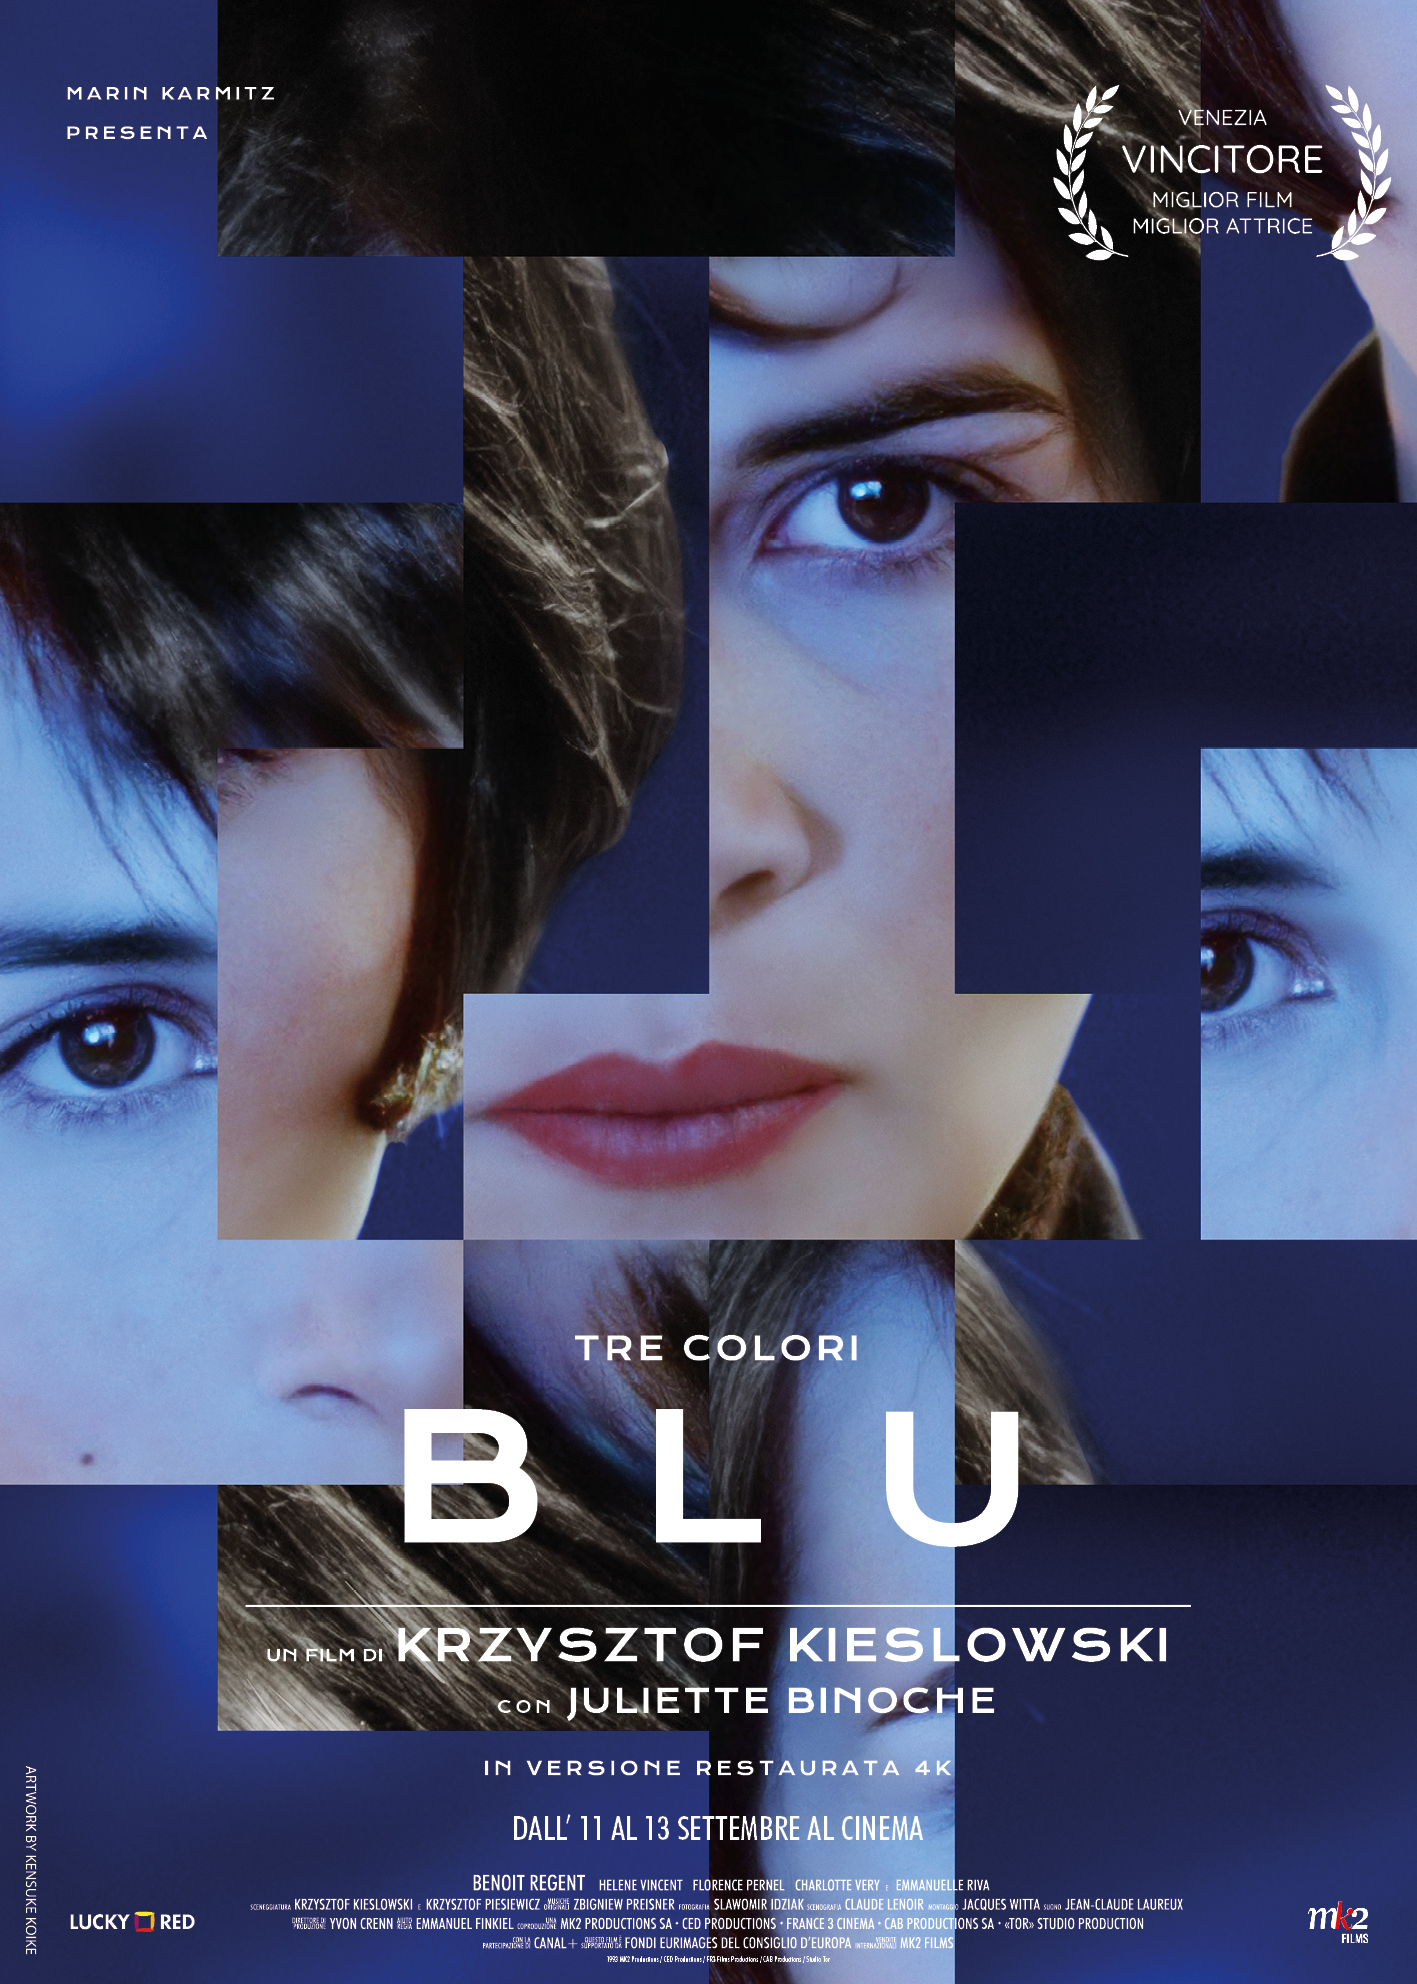 Film Blu, uno dei film de La trilogia dei colori di Krzysztof Kieślowski 50x70